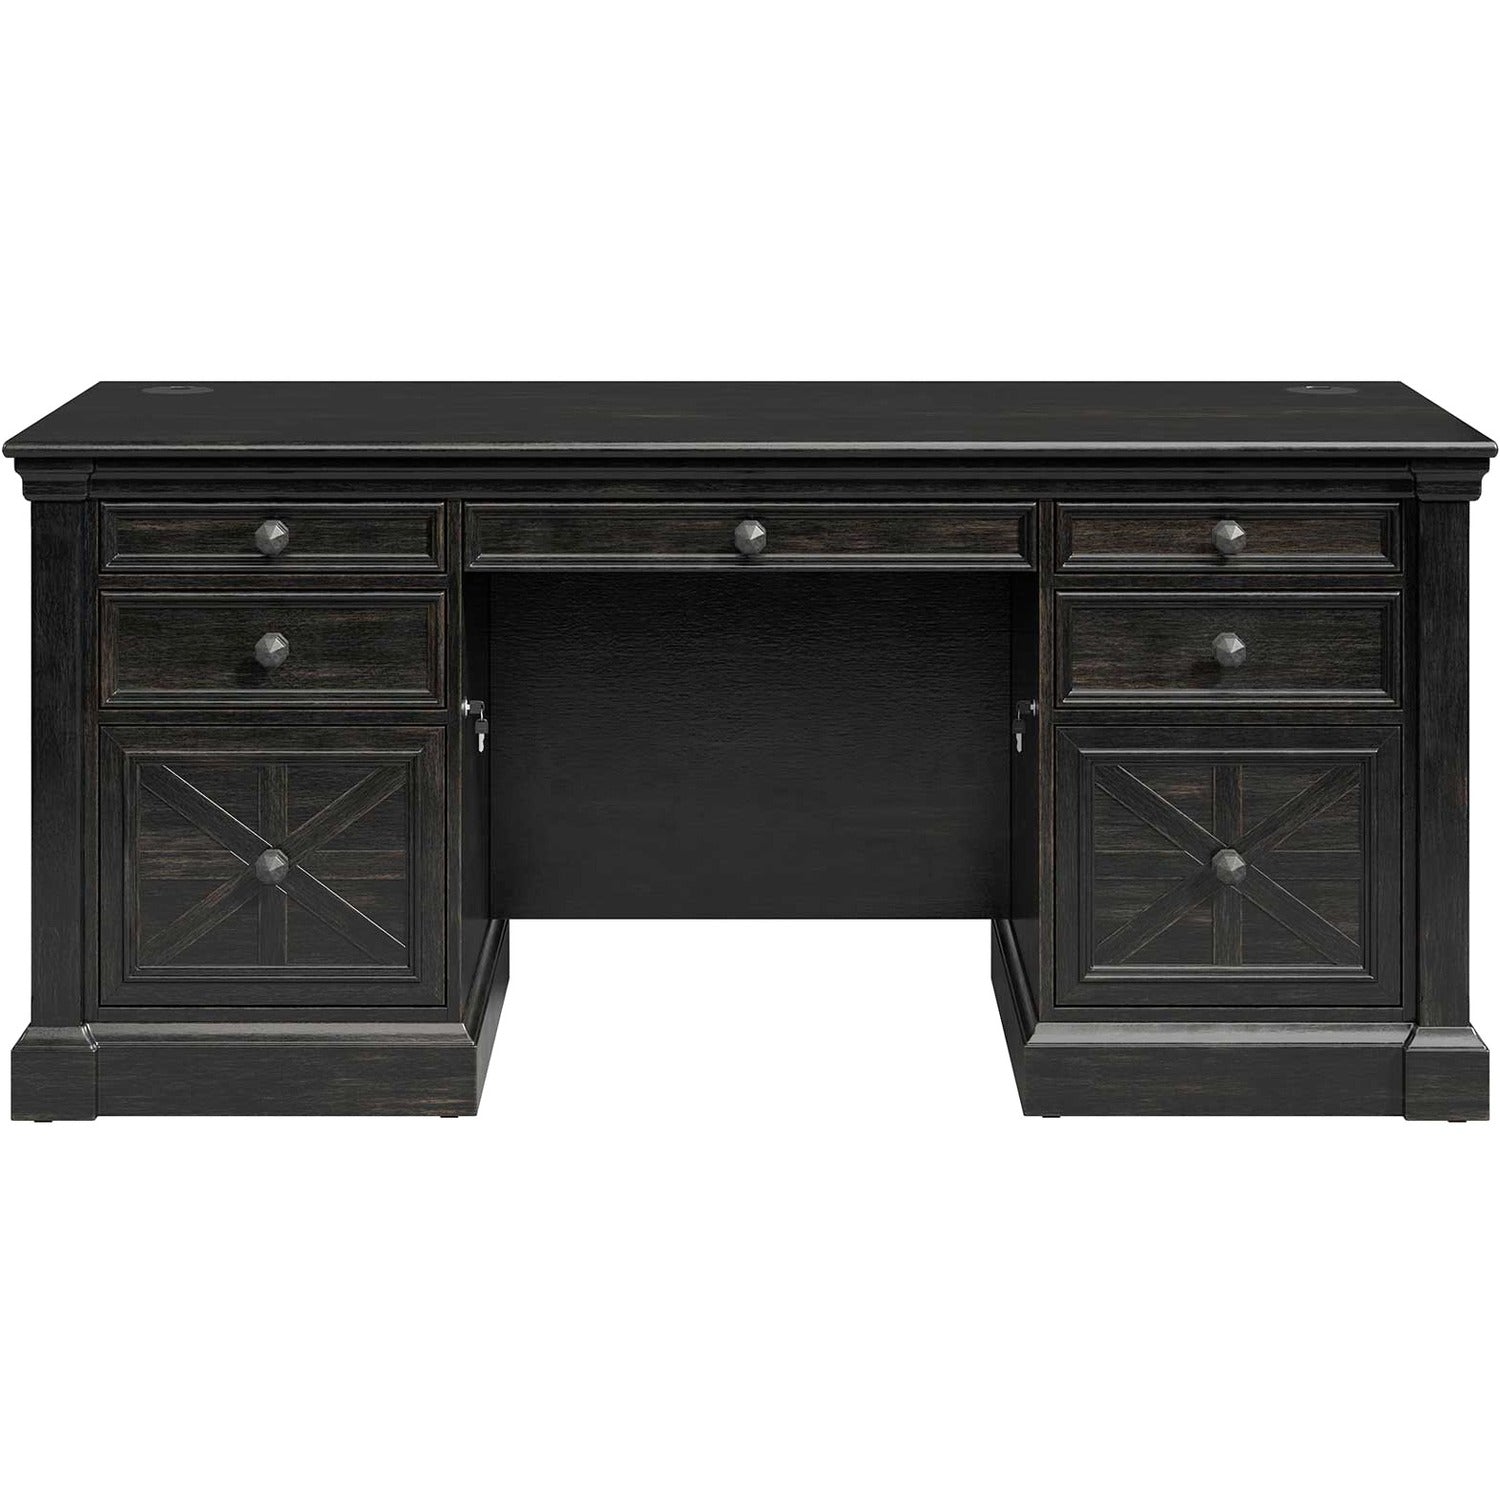 martin-kingston-office-desking-unit-66-x-3030-5-x-utility-file-drawers-double-pedestal-material-wood-finish-dark-chocolate-rub-through_mrtimkn680 - 1